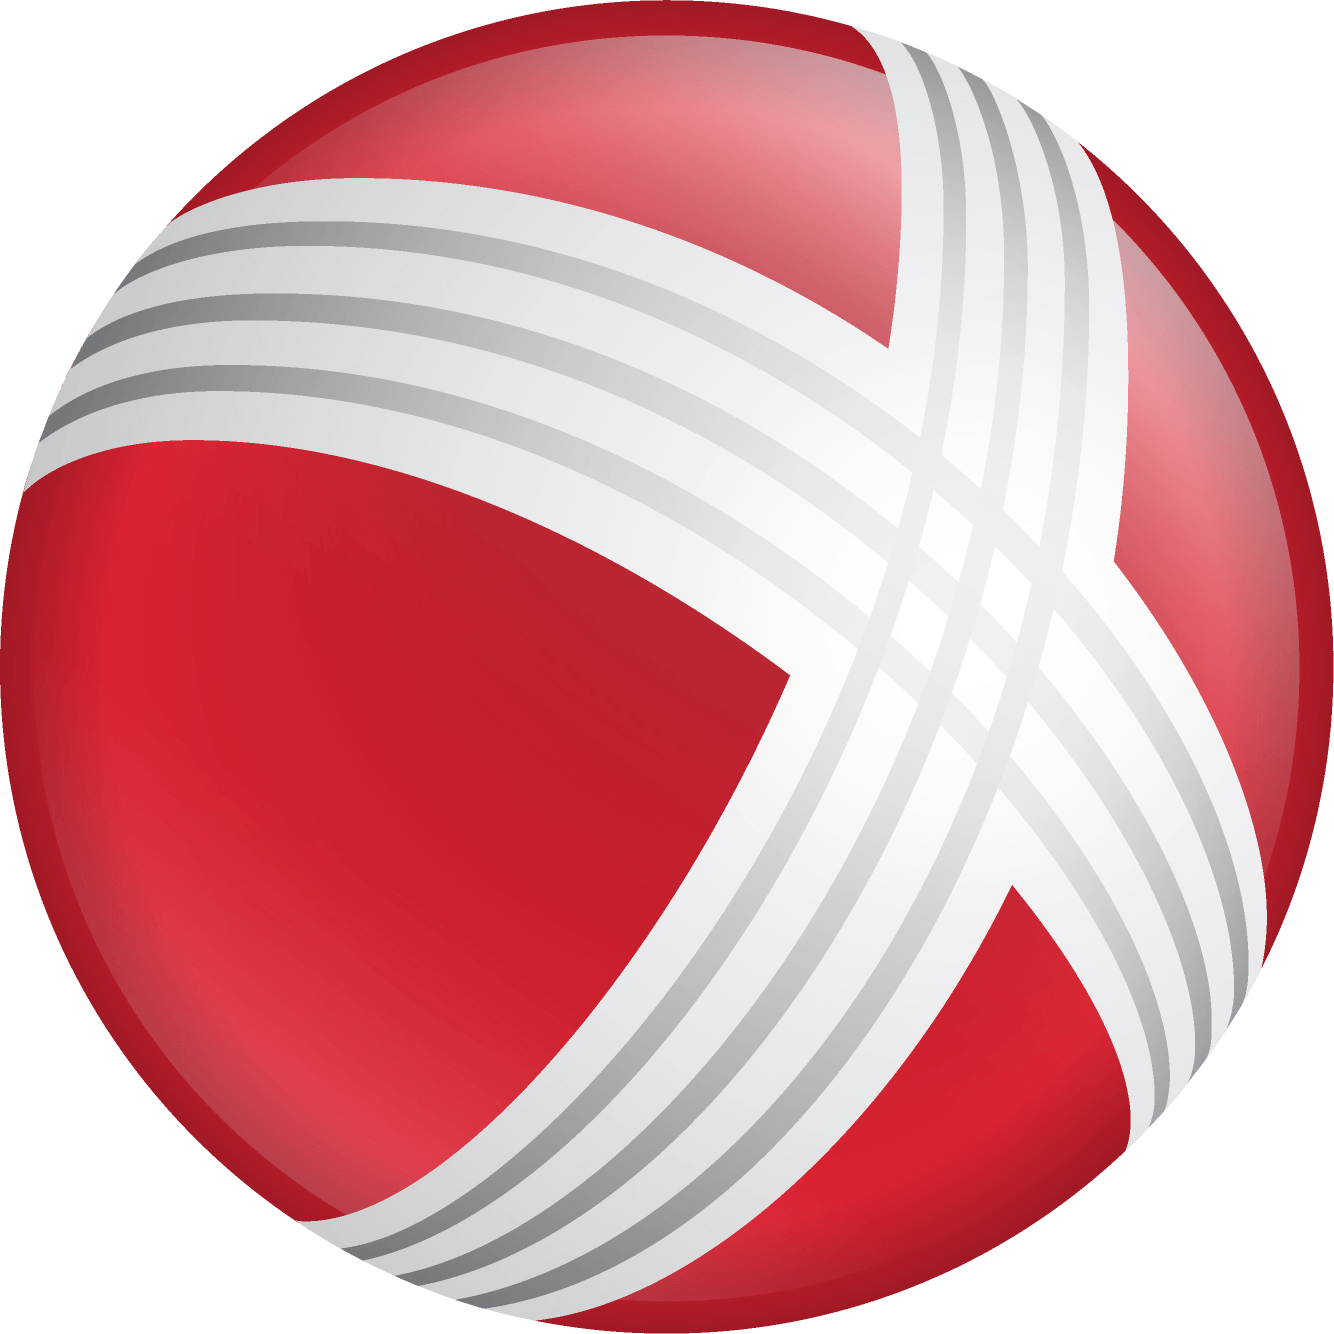 Red Sphere White X Logo - Image - Xerox orb.png | Logopedia | FANDOM powered by Wikia